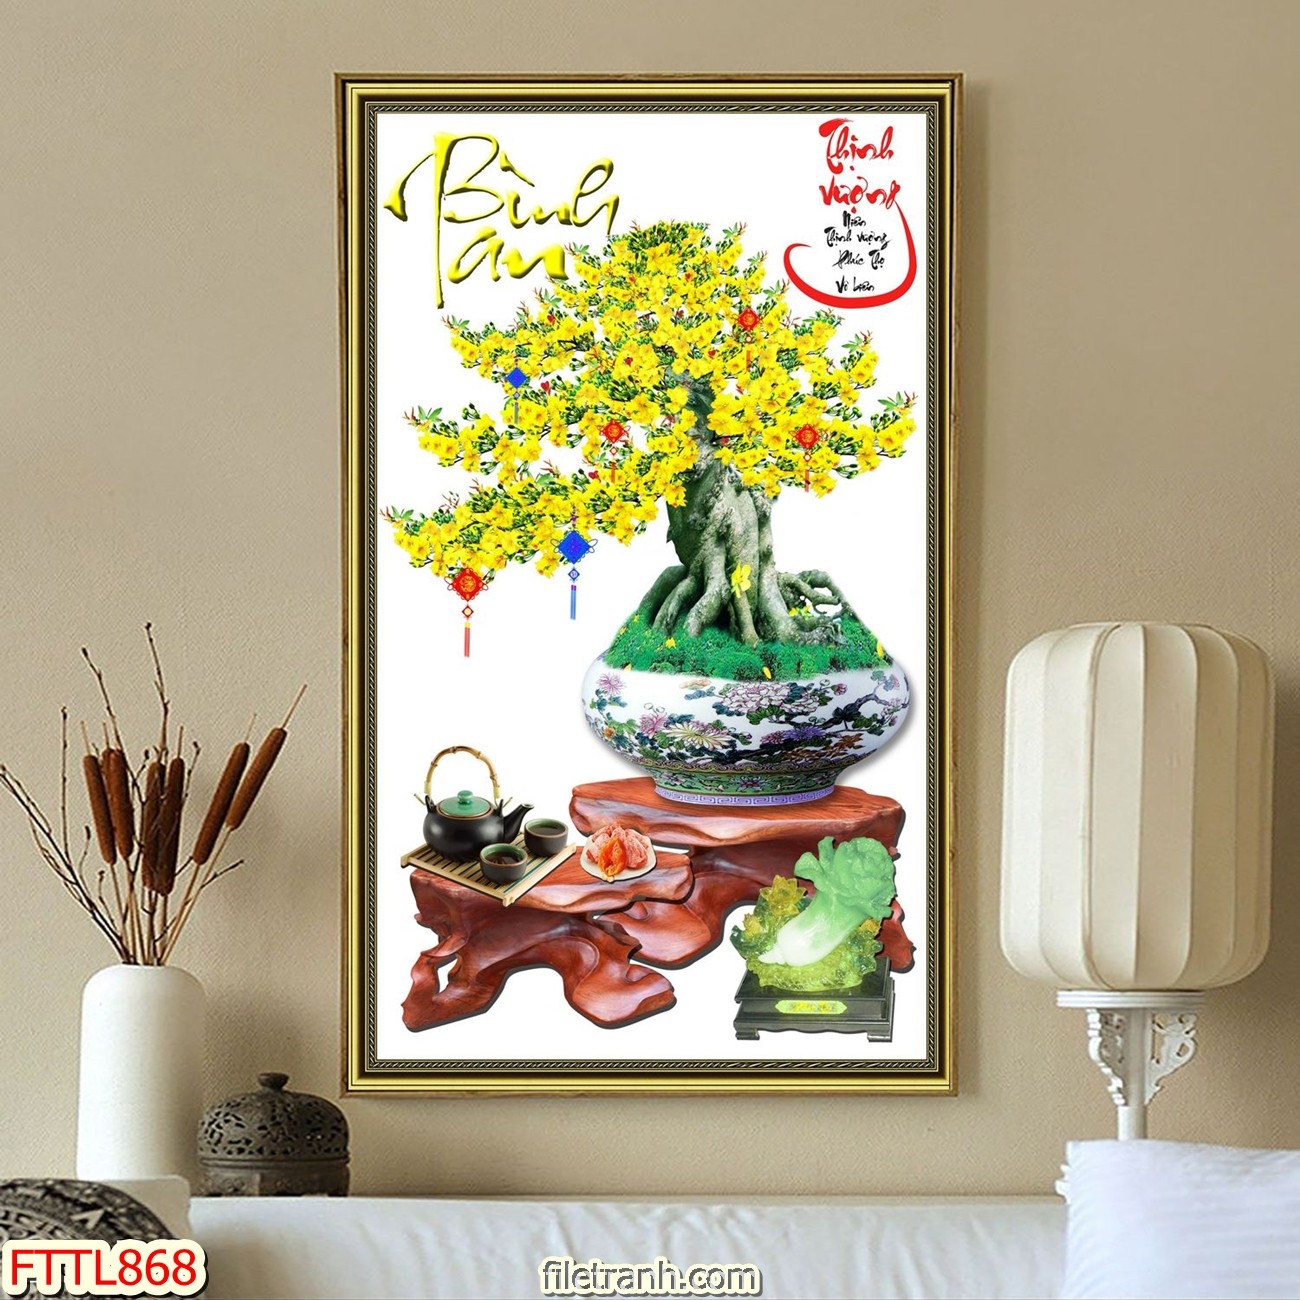 https://filetranh.com/file-tranh-chau-mai-bonsai/file-tranh-chau-mai-bonsai-fttl868.html